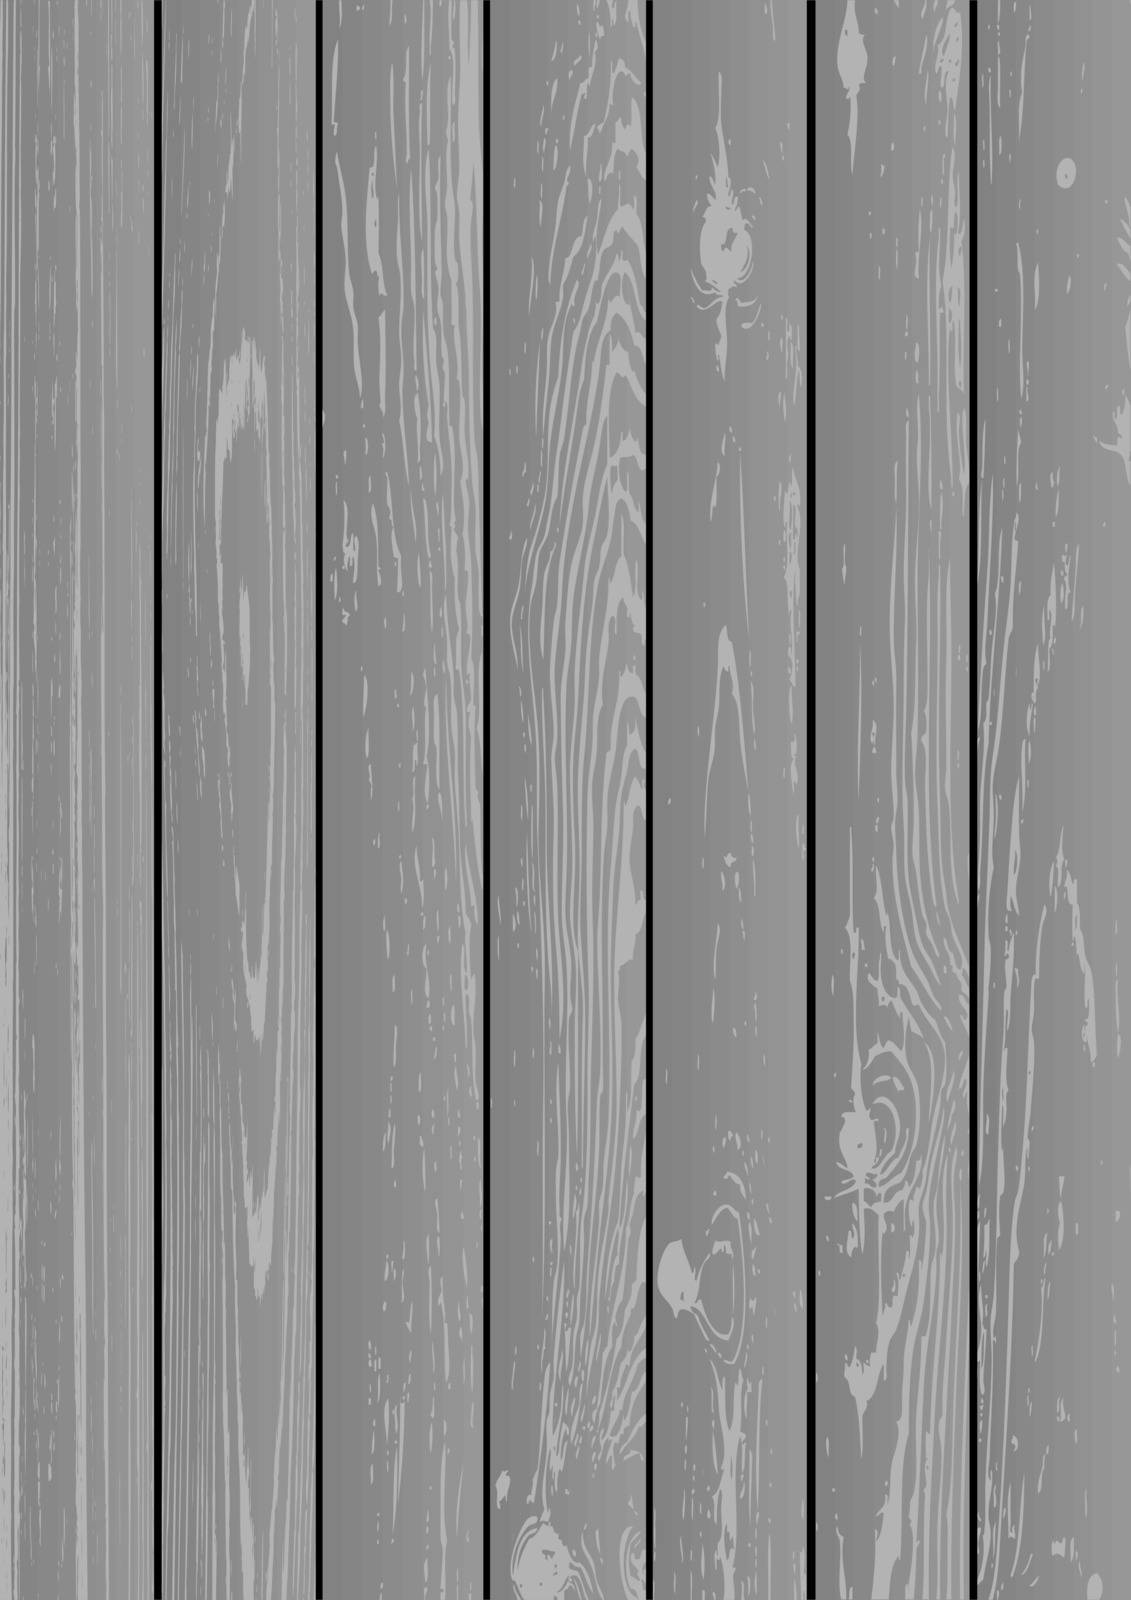 Gray tree desk grain vertical texture background. Board wooden timber plank backdrop. Design interior furniture